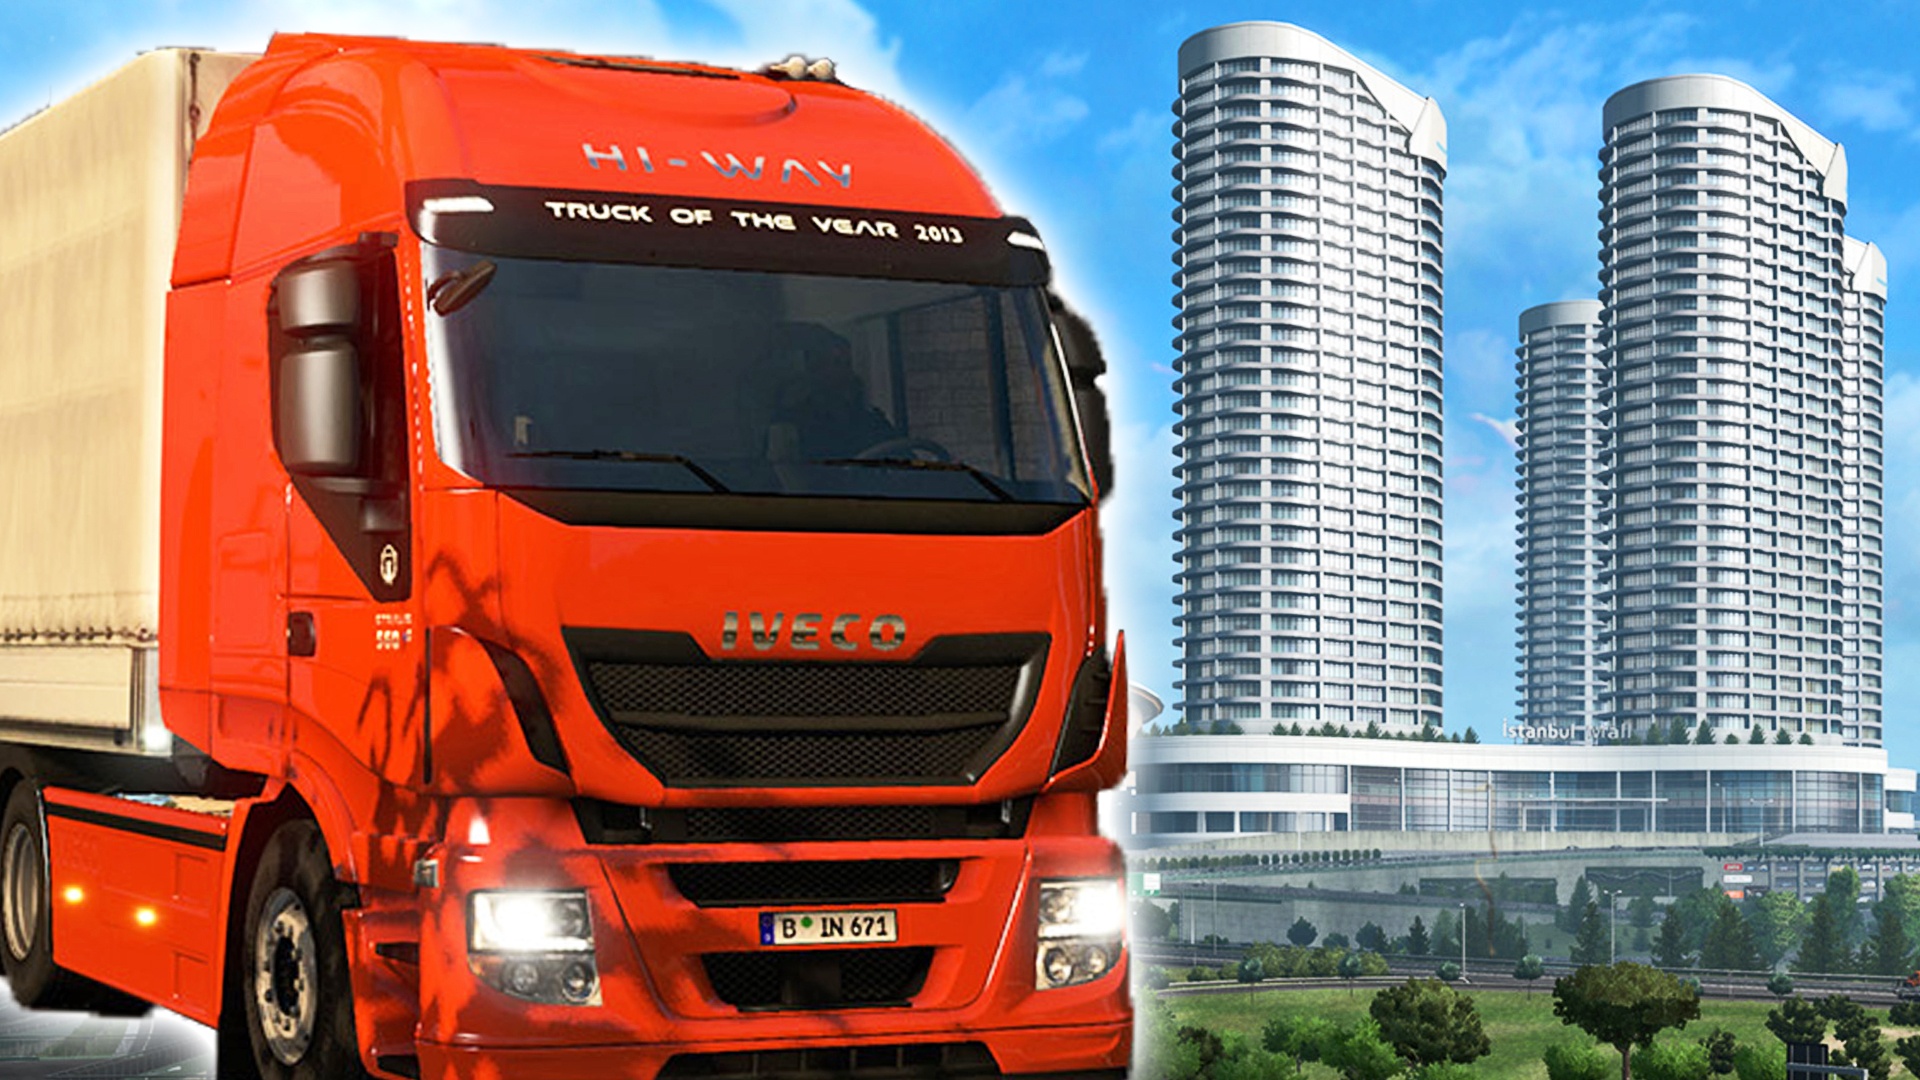 https://images.cgames.de/images/gamestar/4/gs-plus-euro-truck-simulator-2_6143870.jpg